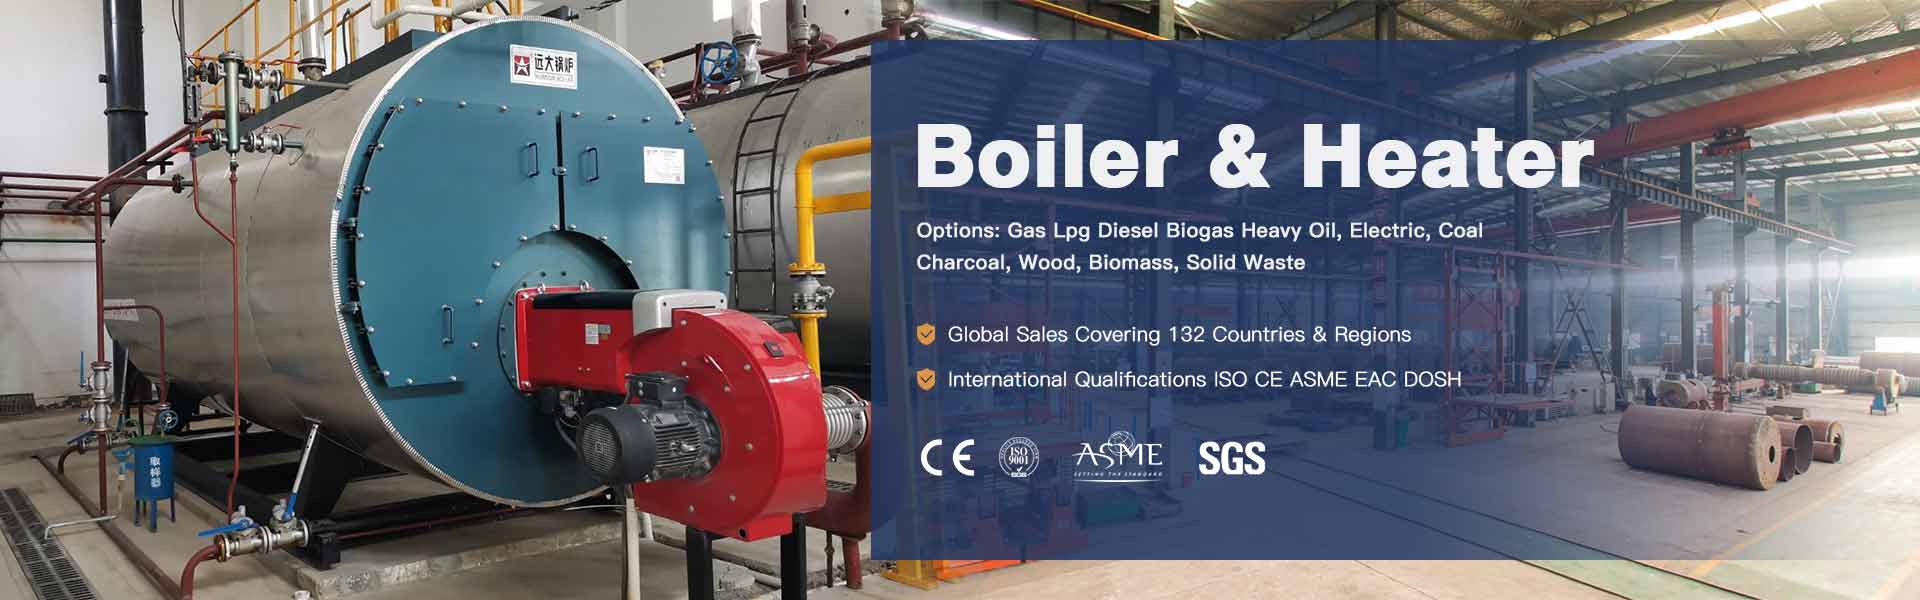 industrial steam boiler,industrial heater boiler,yuanda boiler